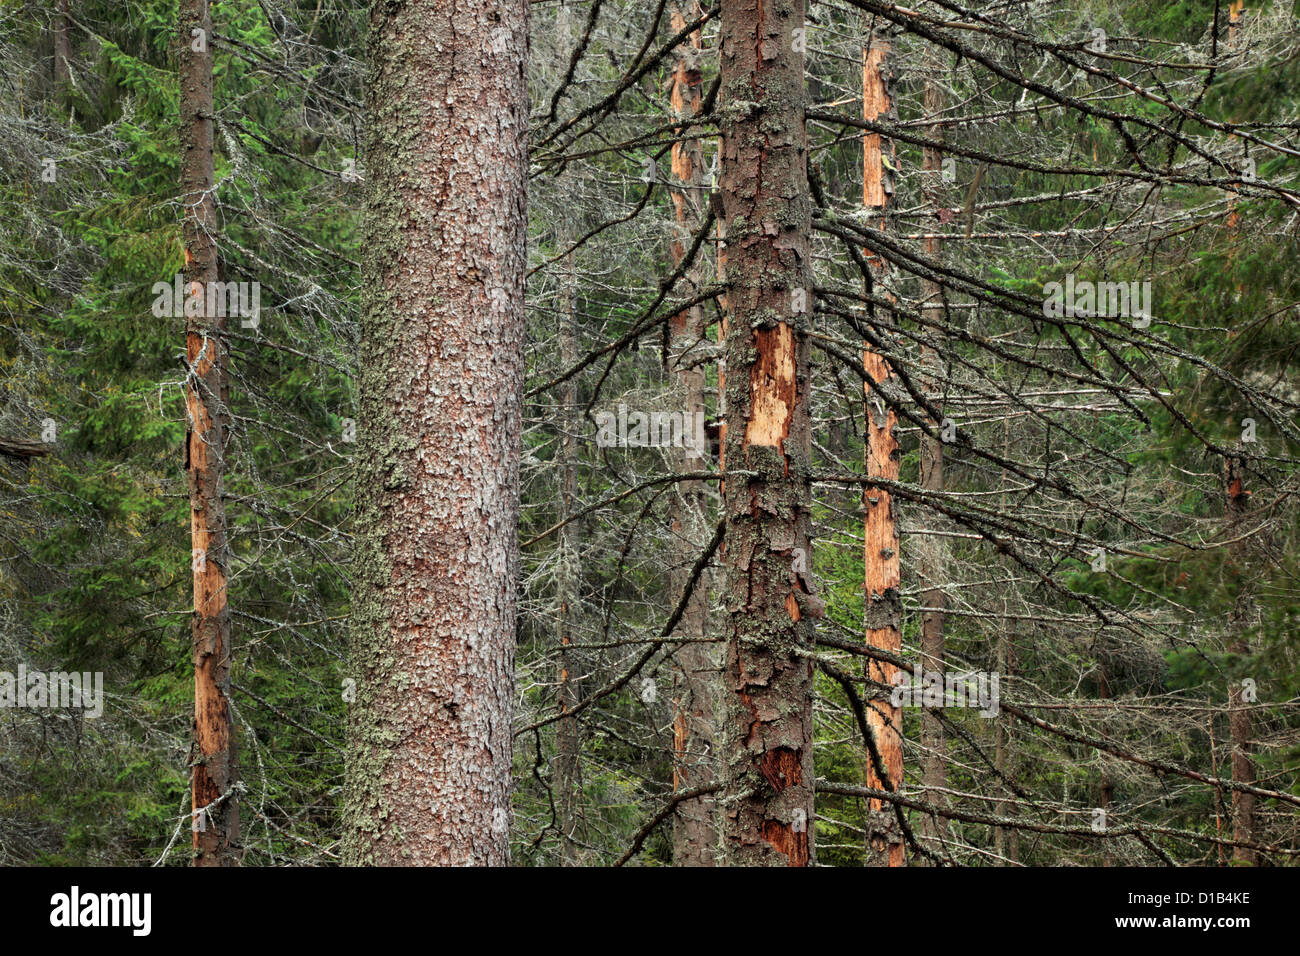 Pine forest in the Tatras Mountain region of Slovakia Stock Photo